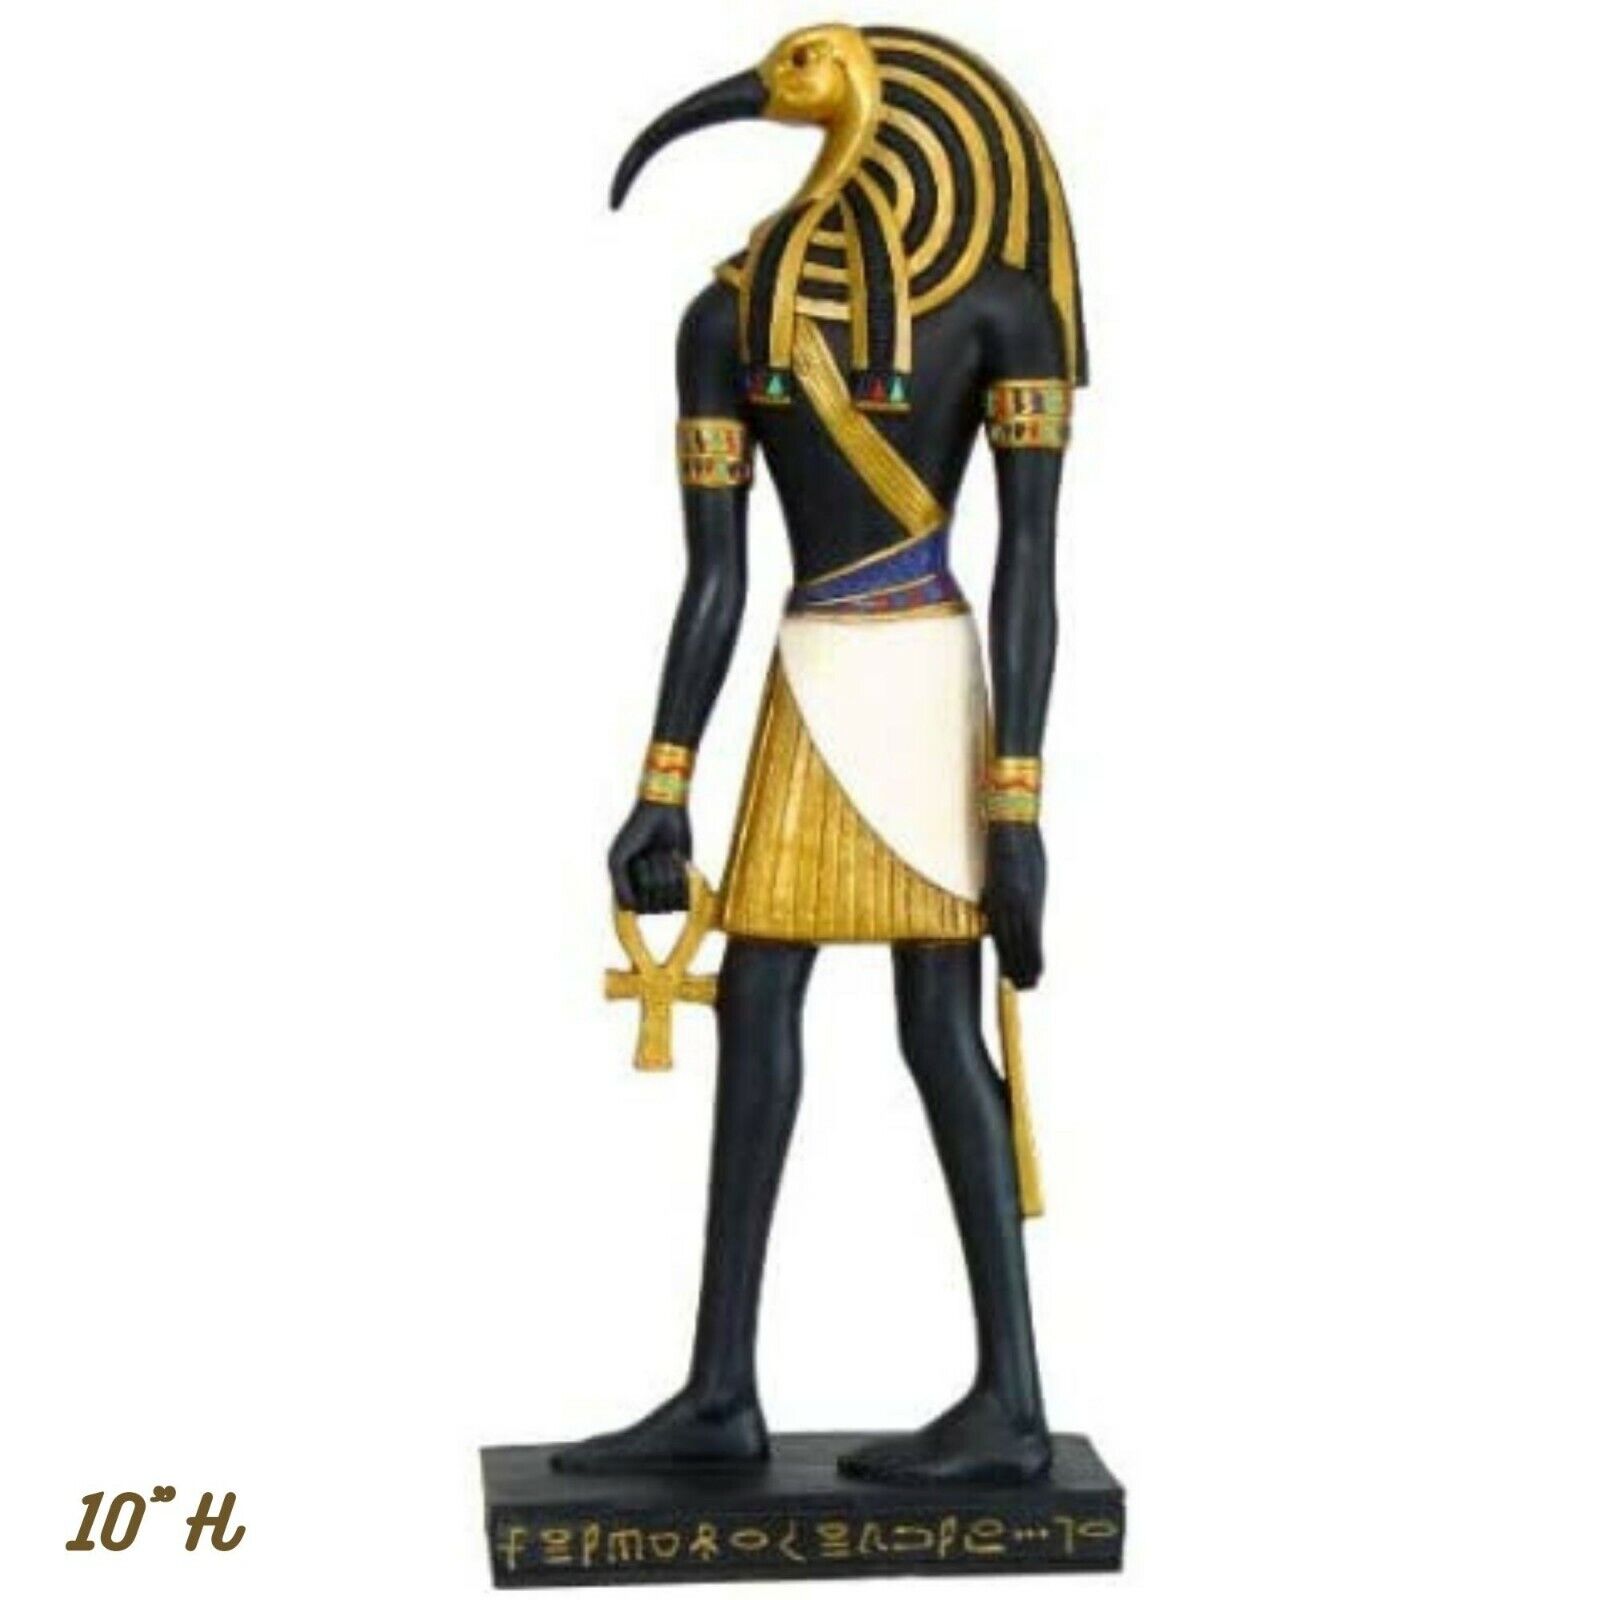 Tehuti Thoth Statue Deity Ancient Egyptian Egyptian Altar God Figure Decor Gift